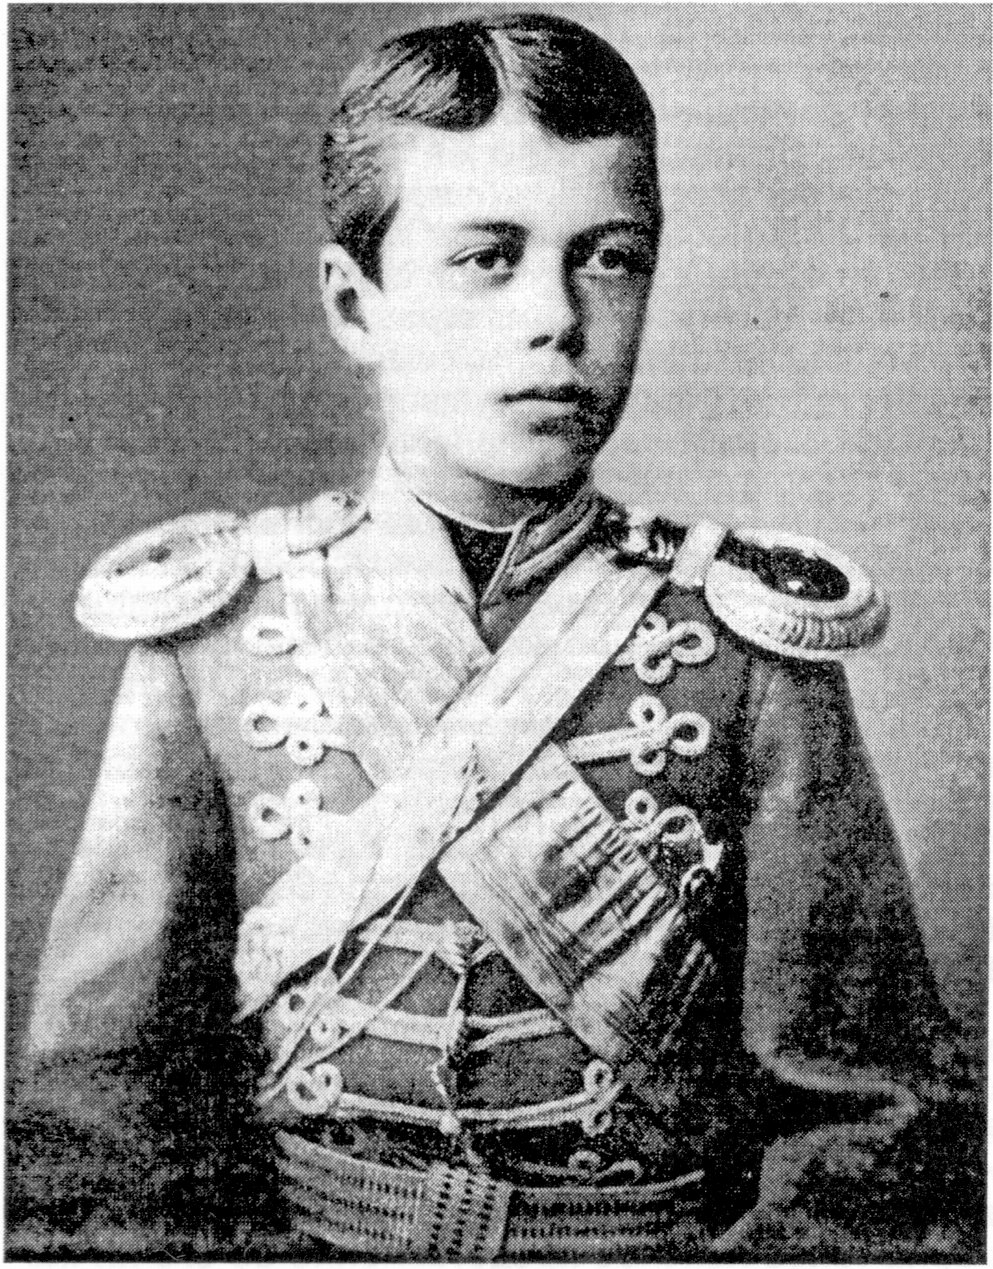 Цесаревич великий князь Николай Александрович. 1870-е годы